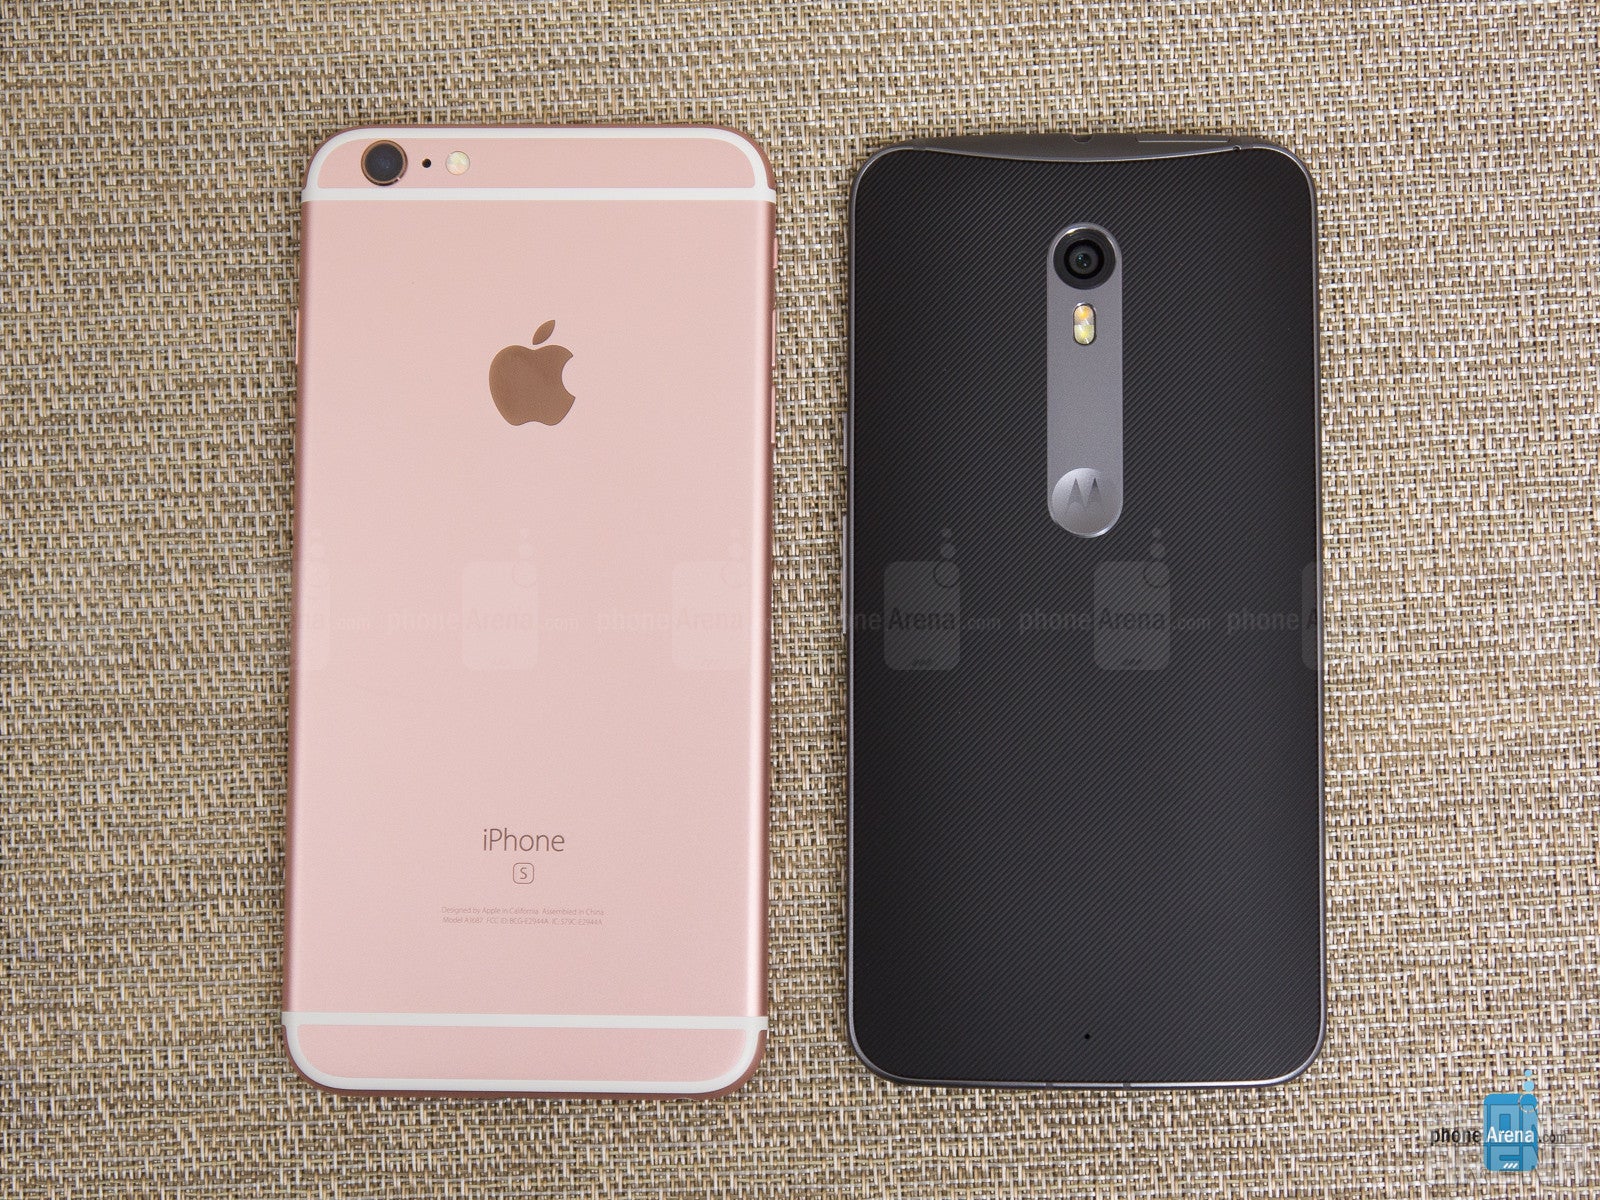 Apple iPhone 6s Plus vs Motorola Moto X Pure